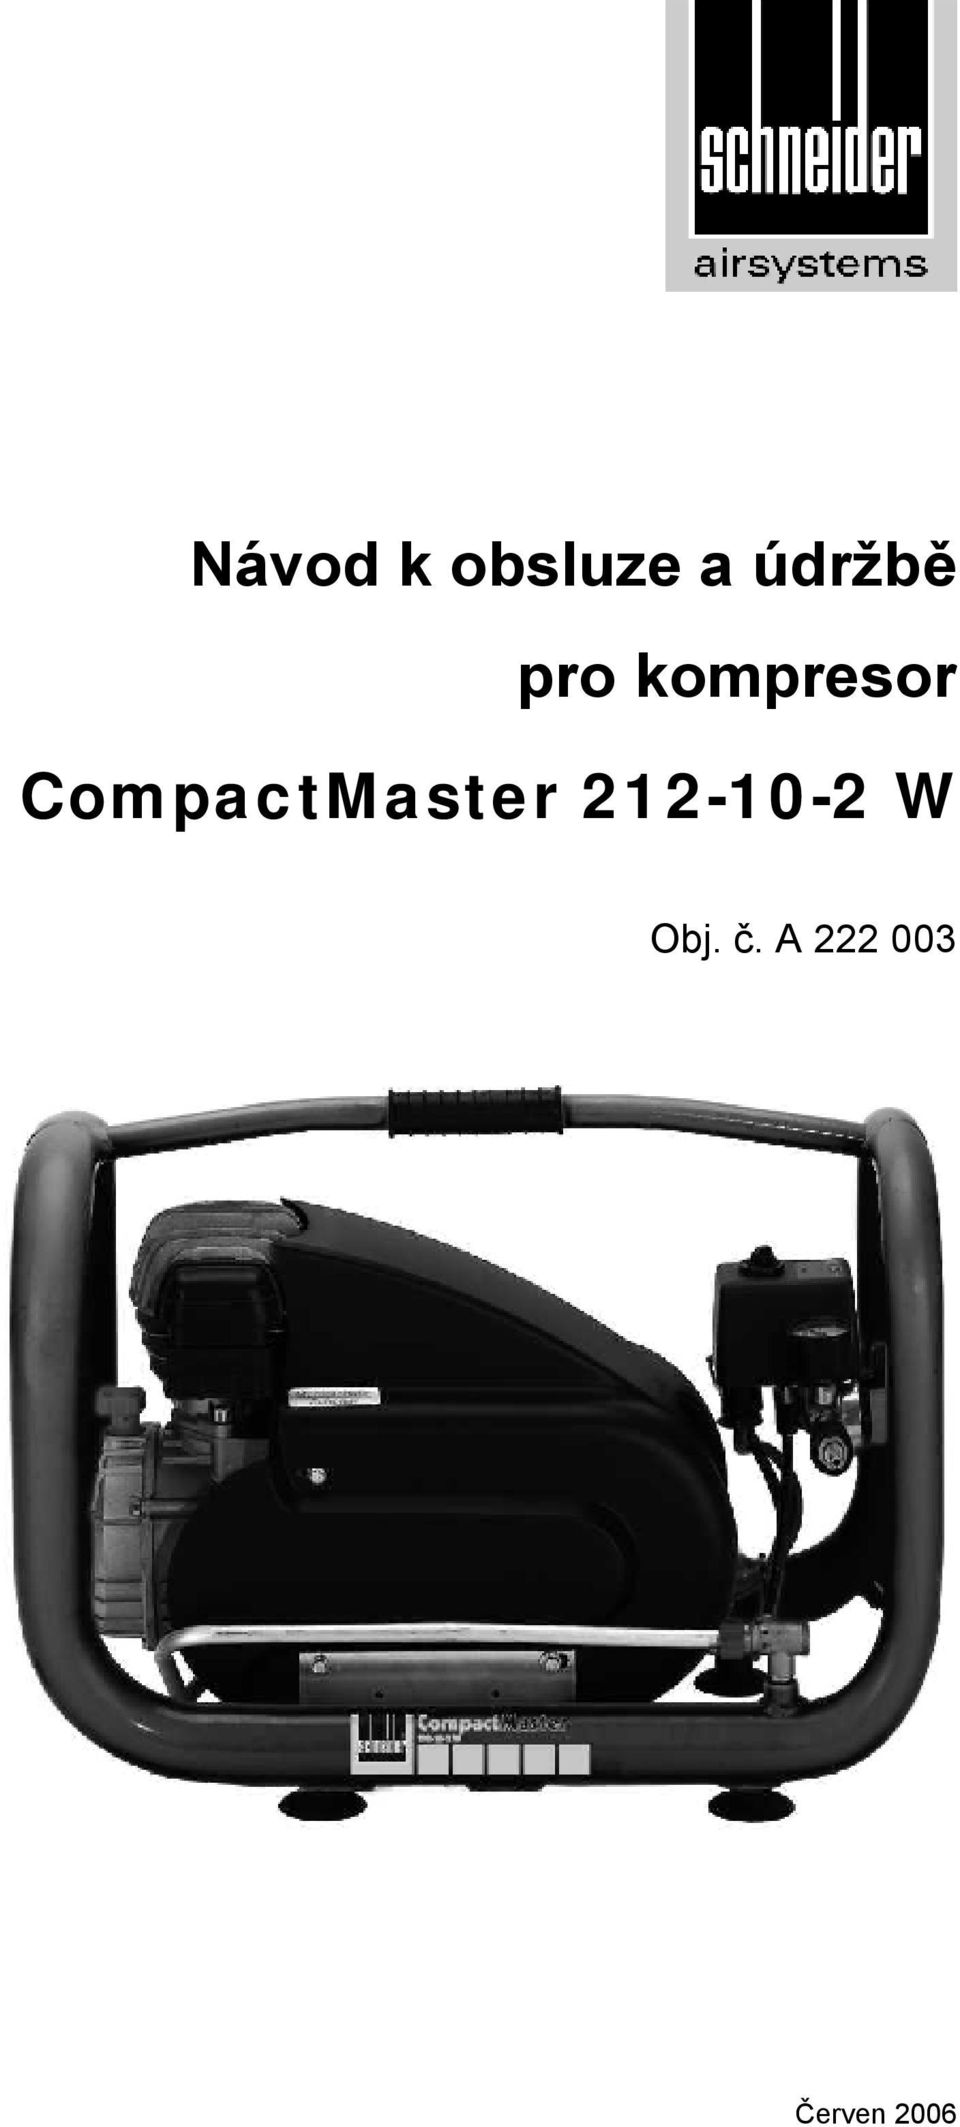 CompactMaster 212-10-2